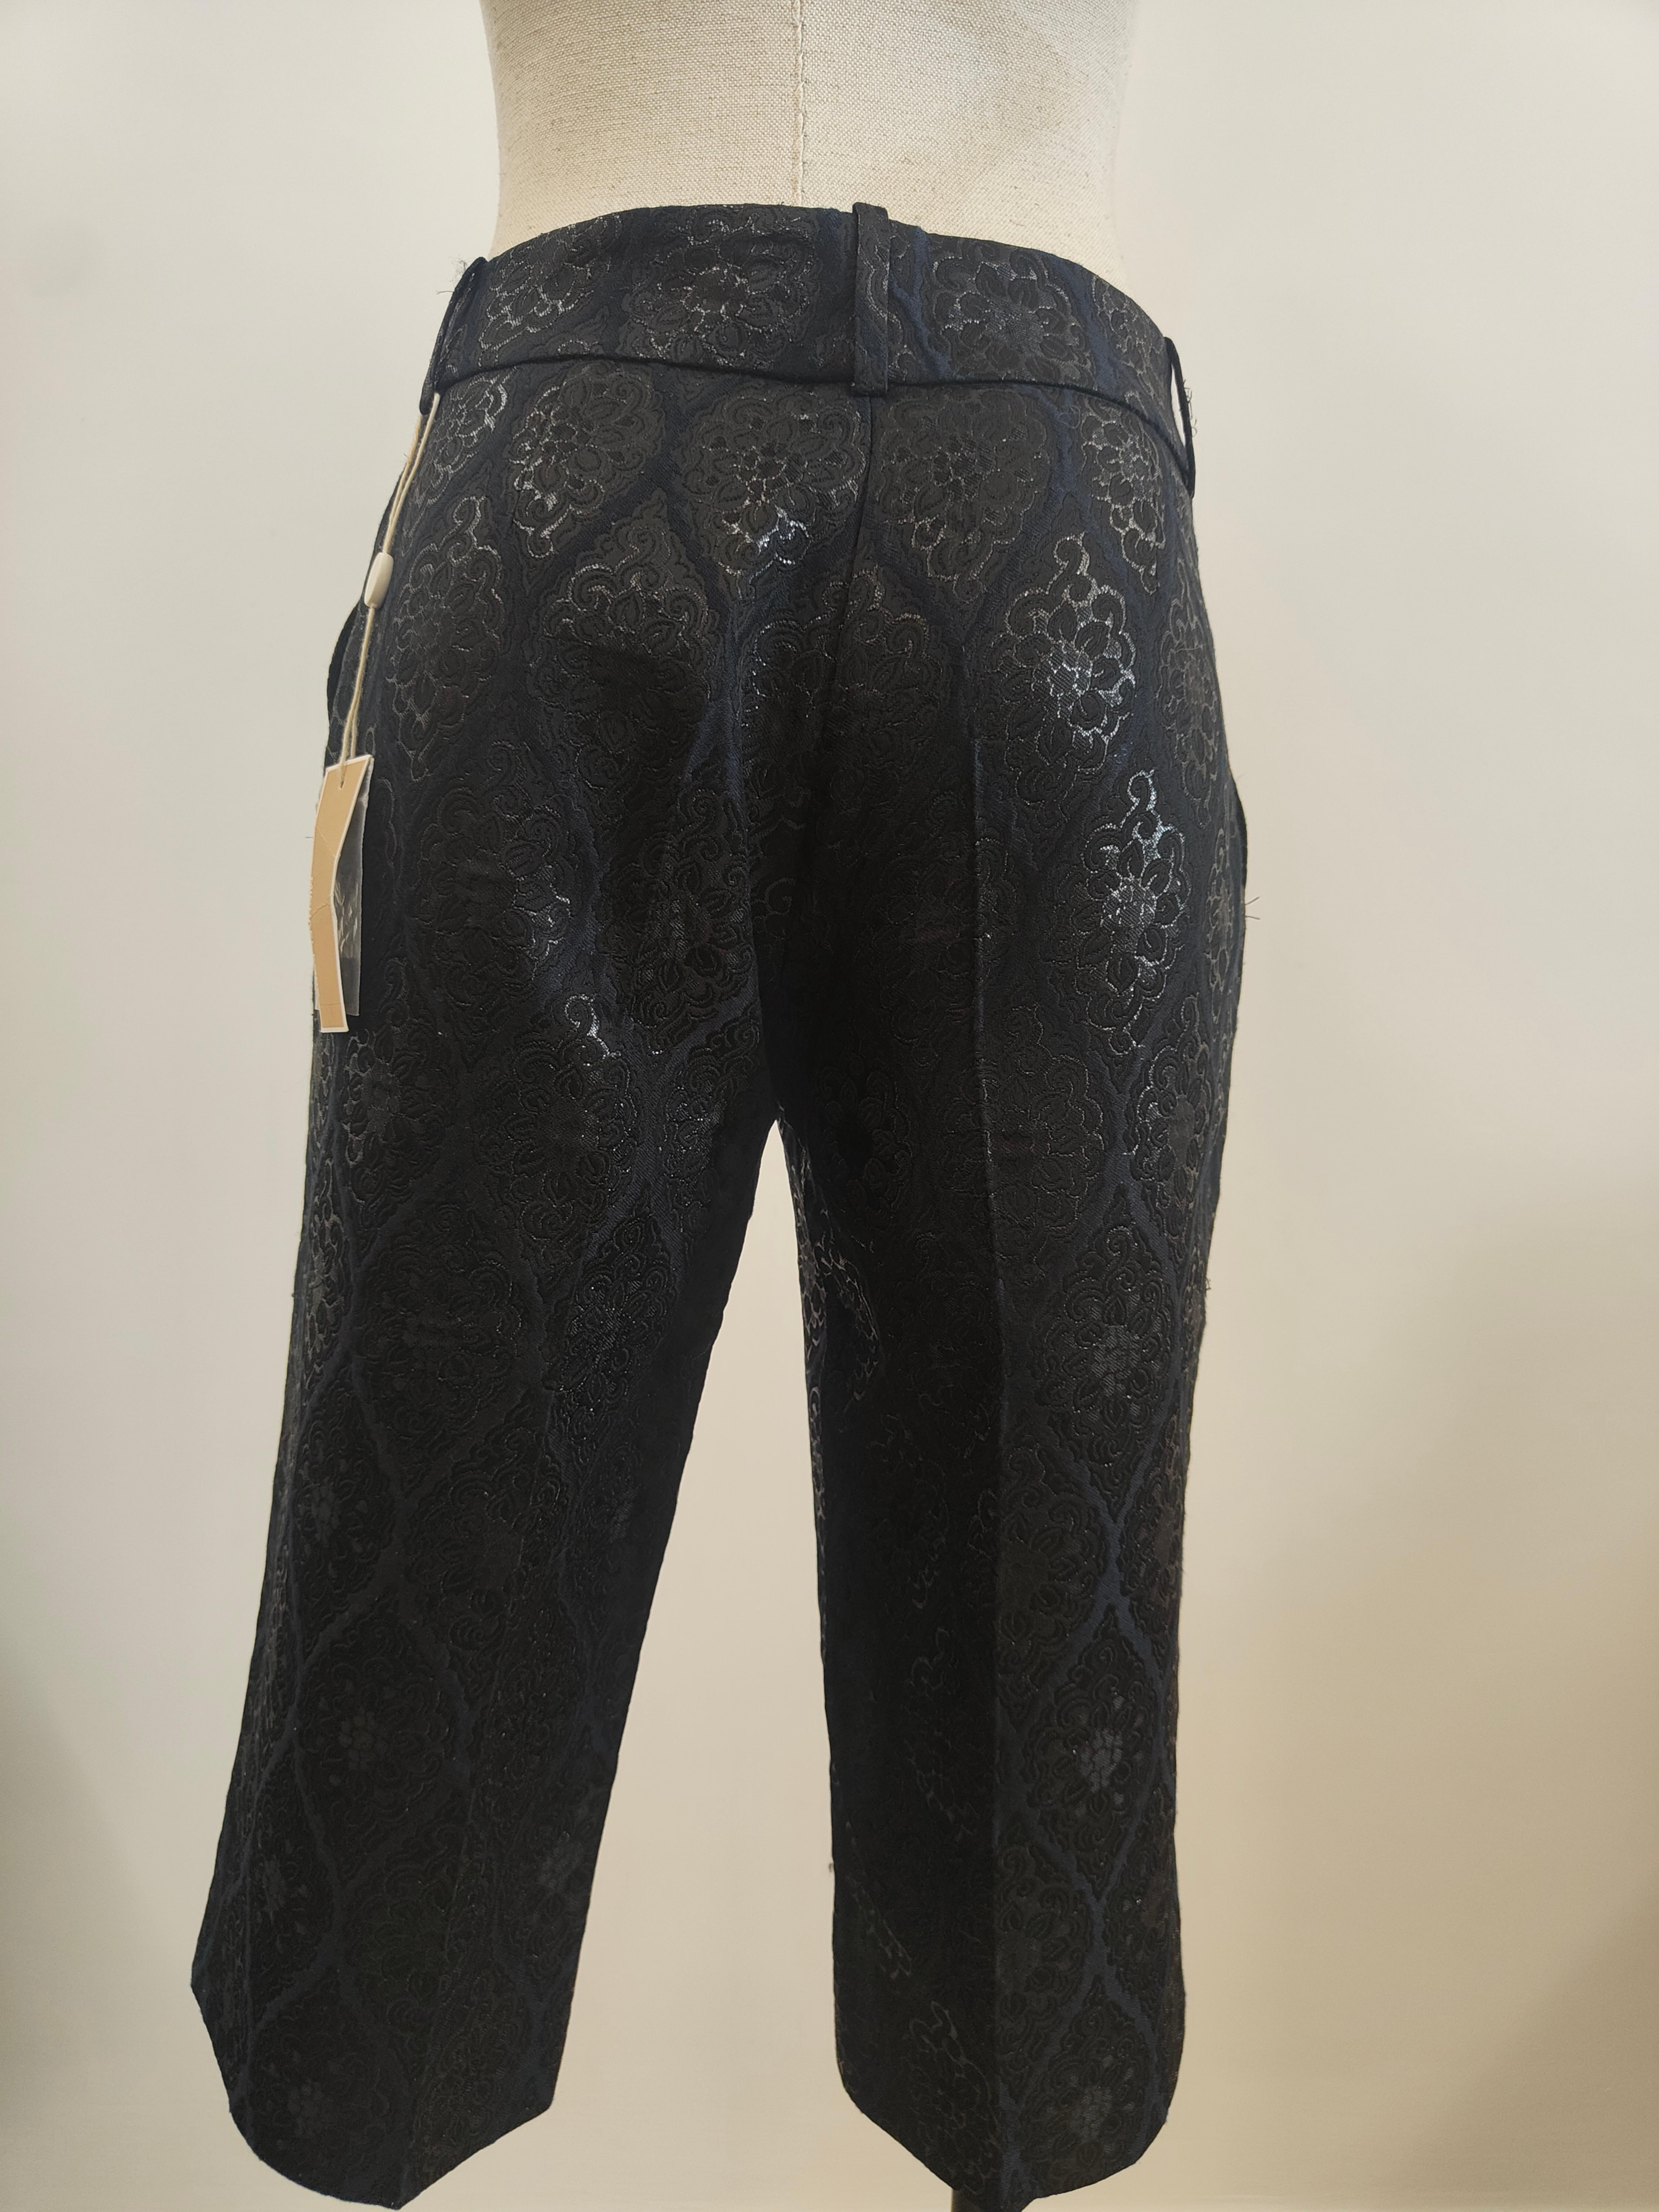 Black Michael Kors black pants NWOT For Sale